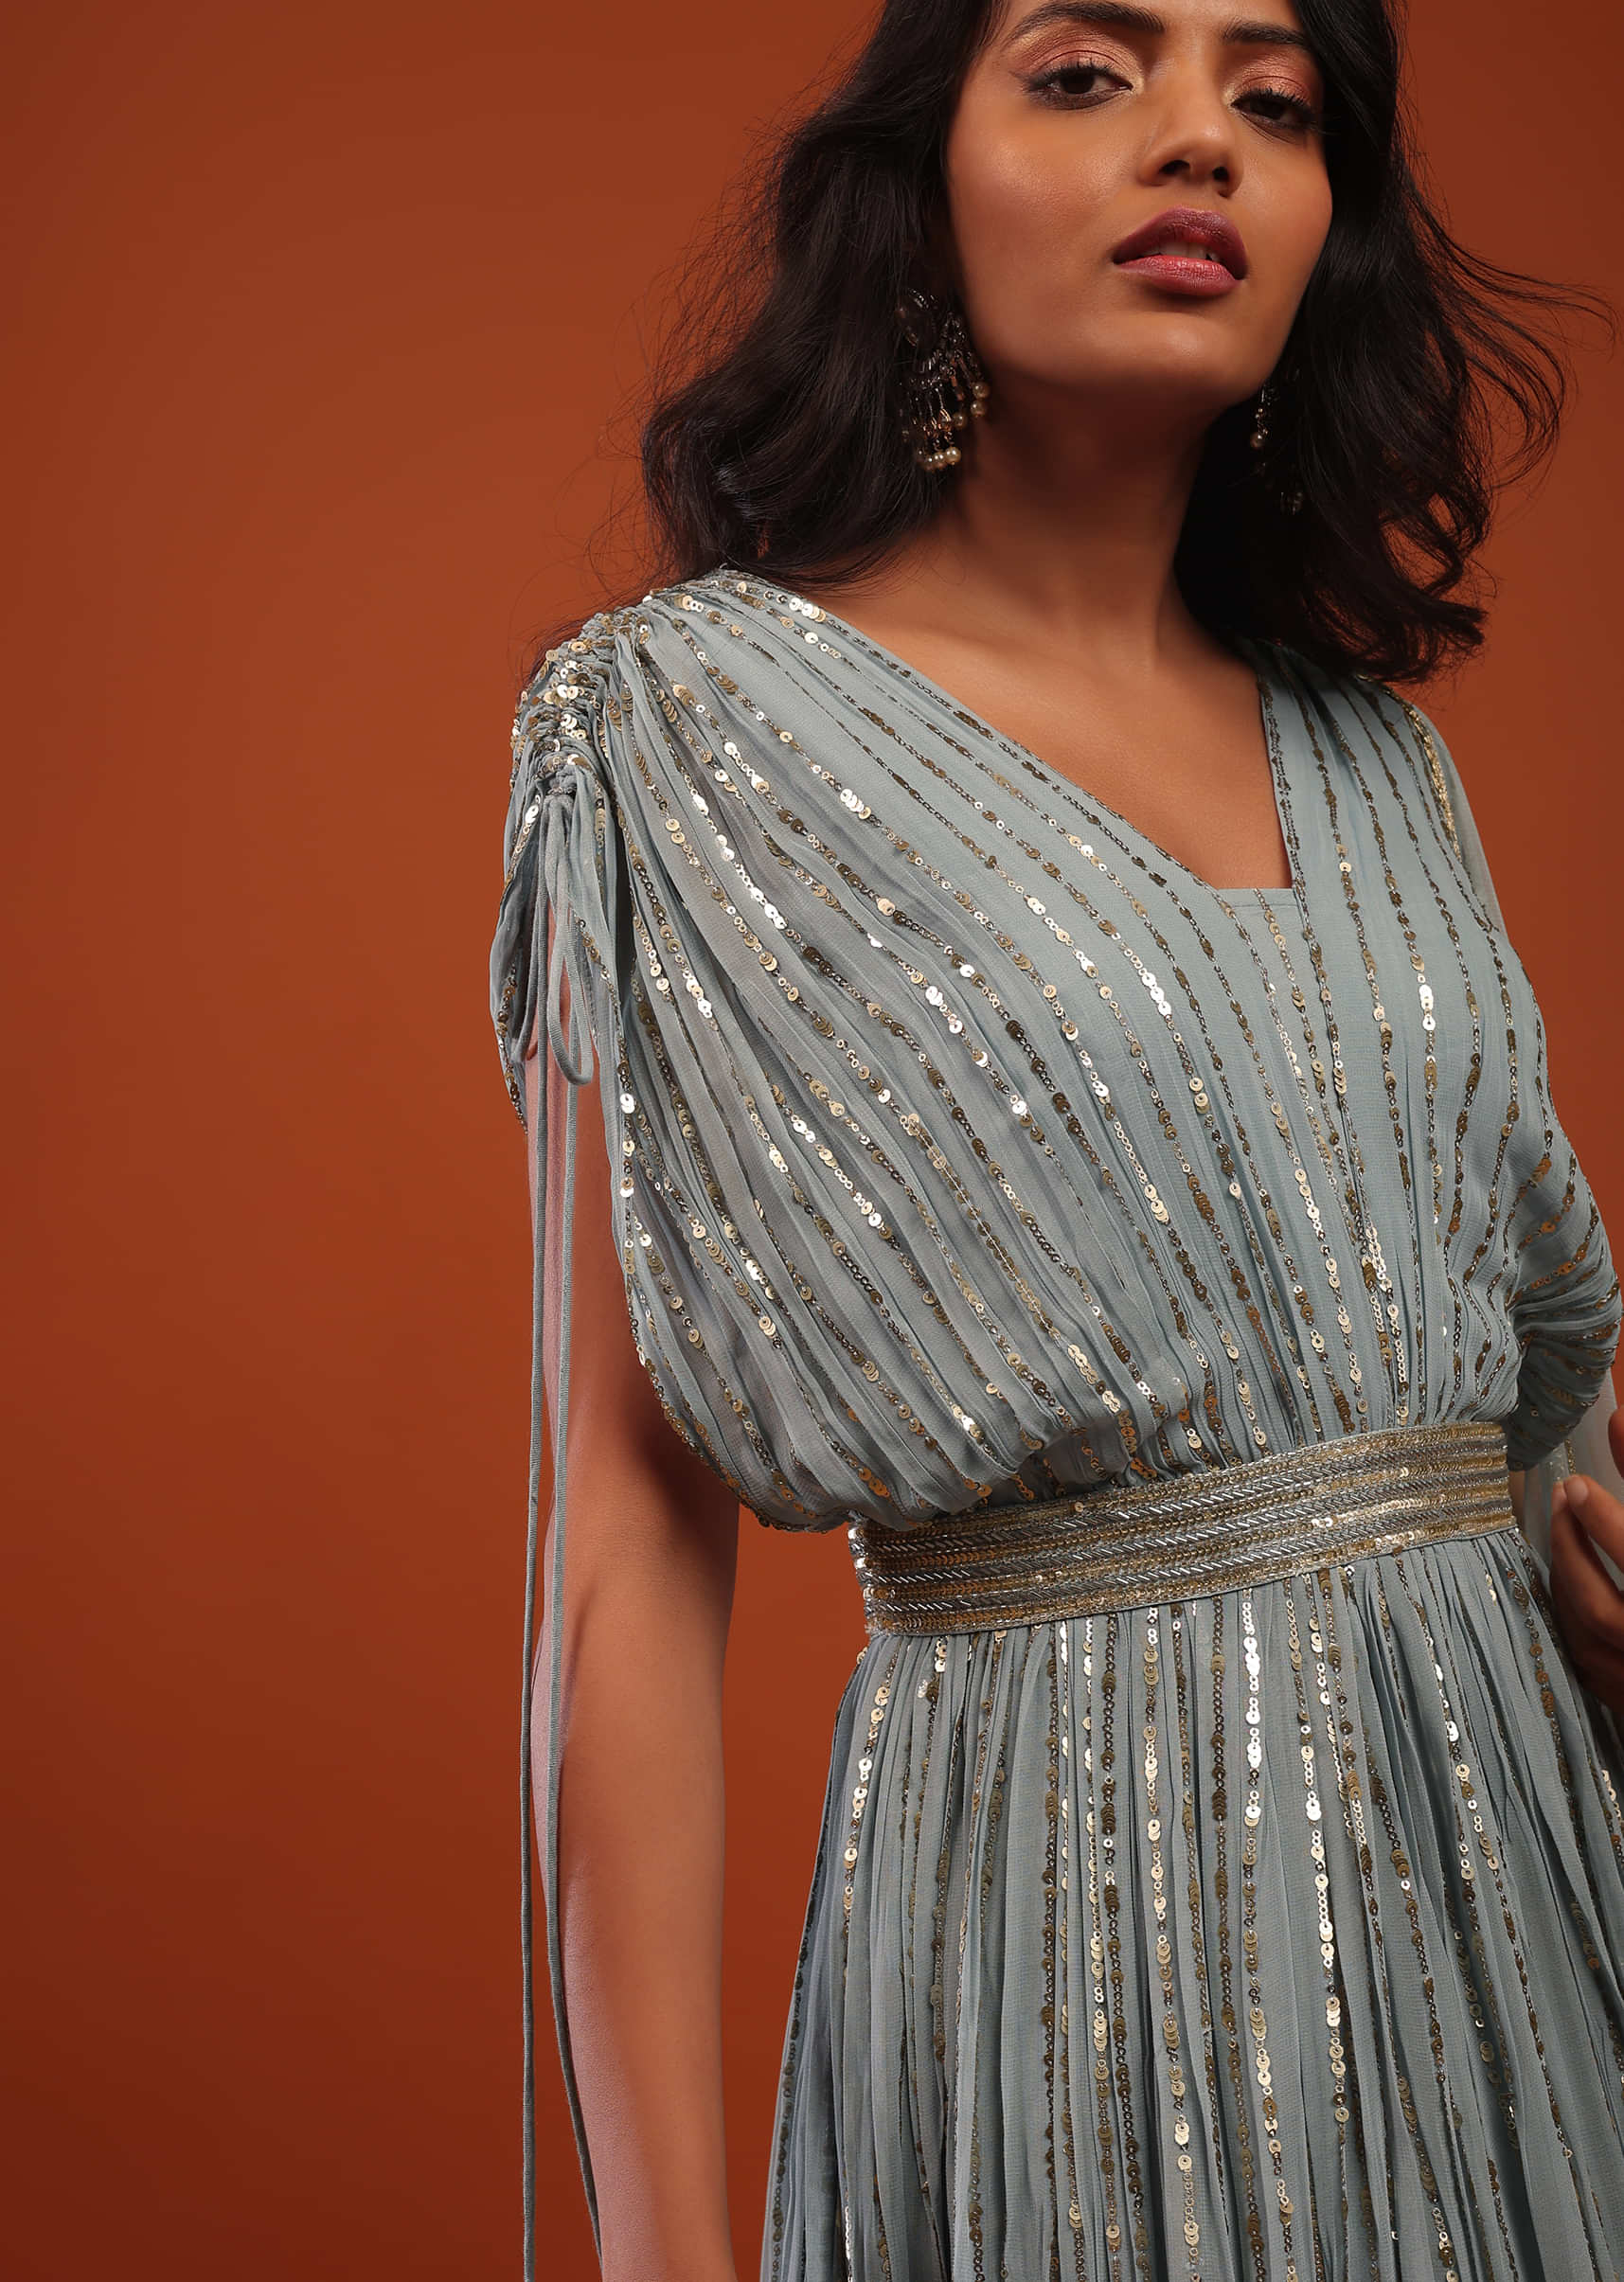 Slate Blue Georgette Anarkali Suit In Sequins And Sali Work